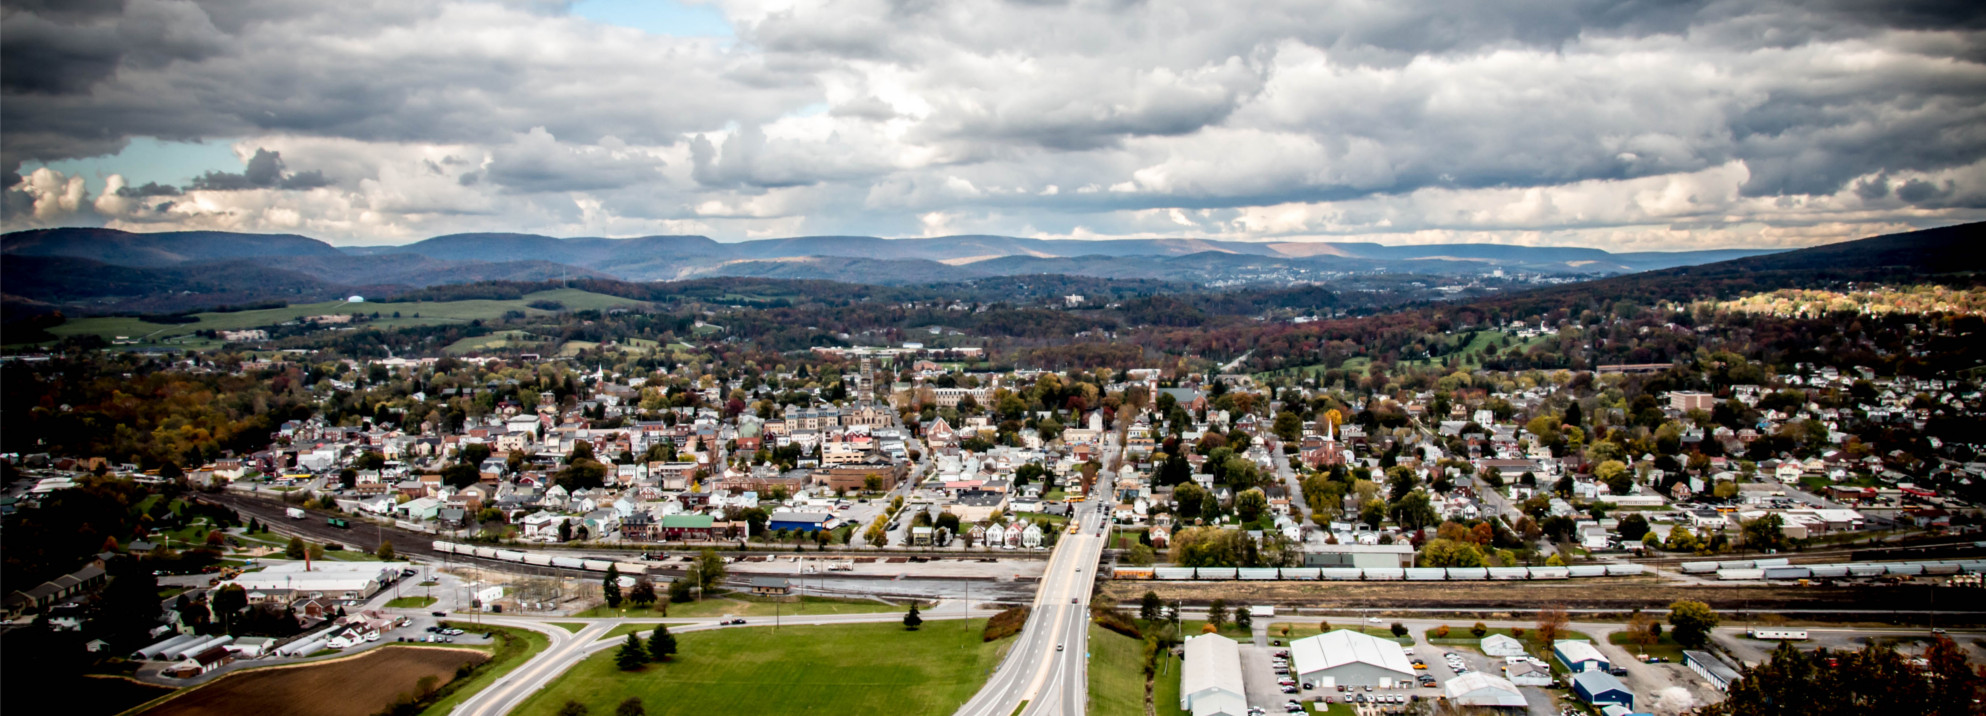 Aerial photo of Hollidaysburg